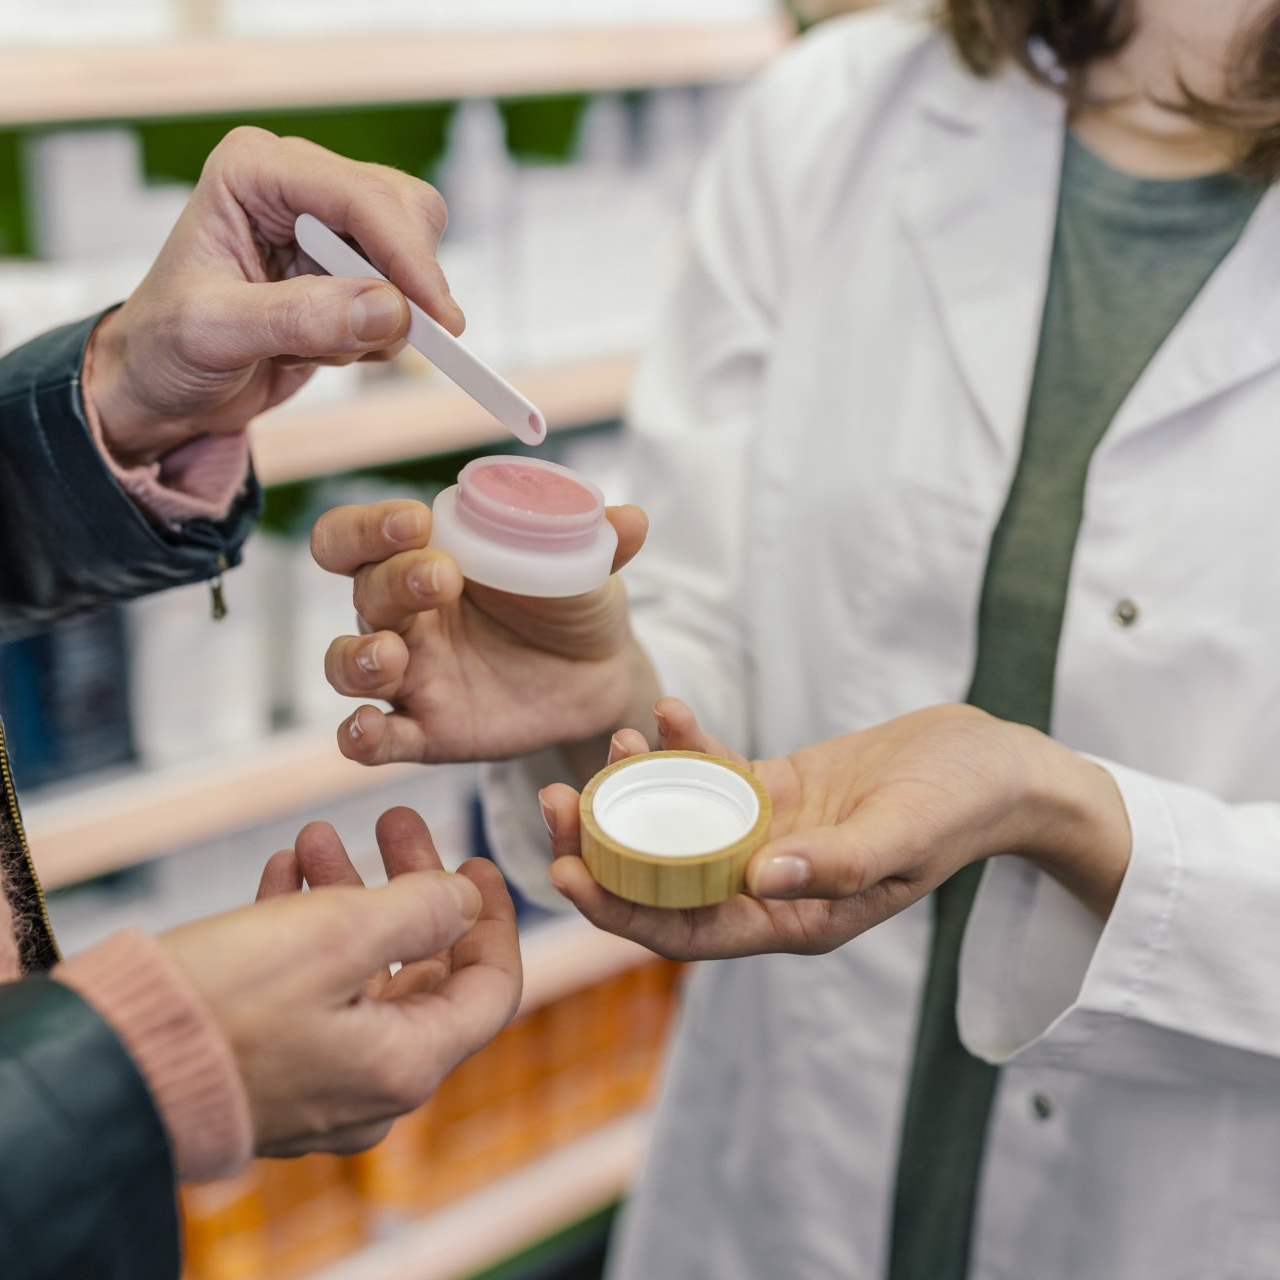 Customer testing cosmetics in pharmacy - stock photo